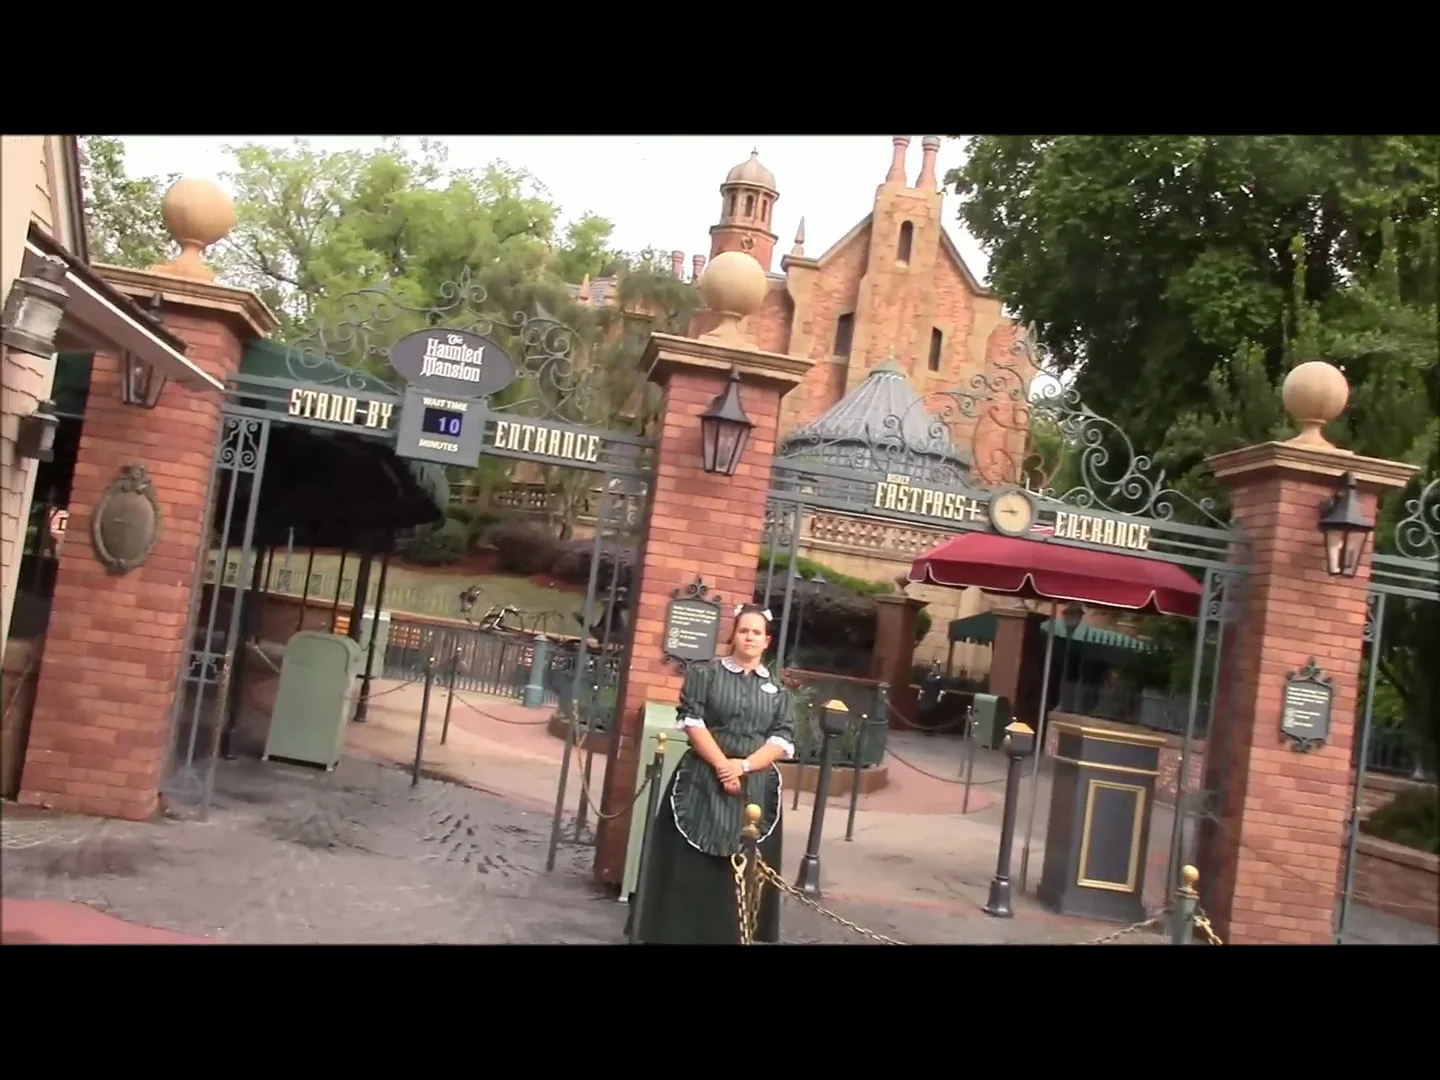 The Making of Walt Disney World on Vimeo